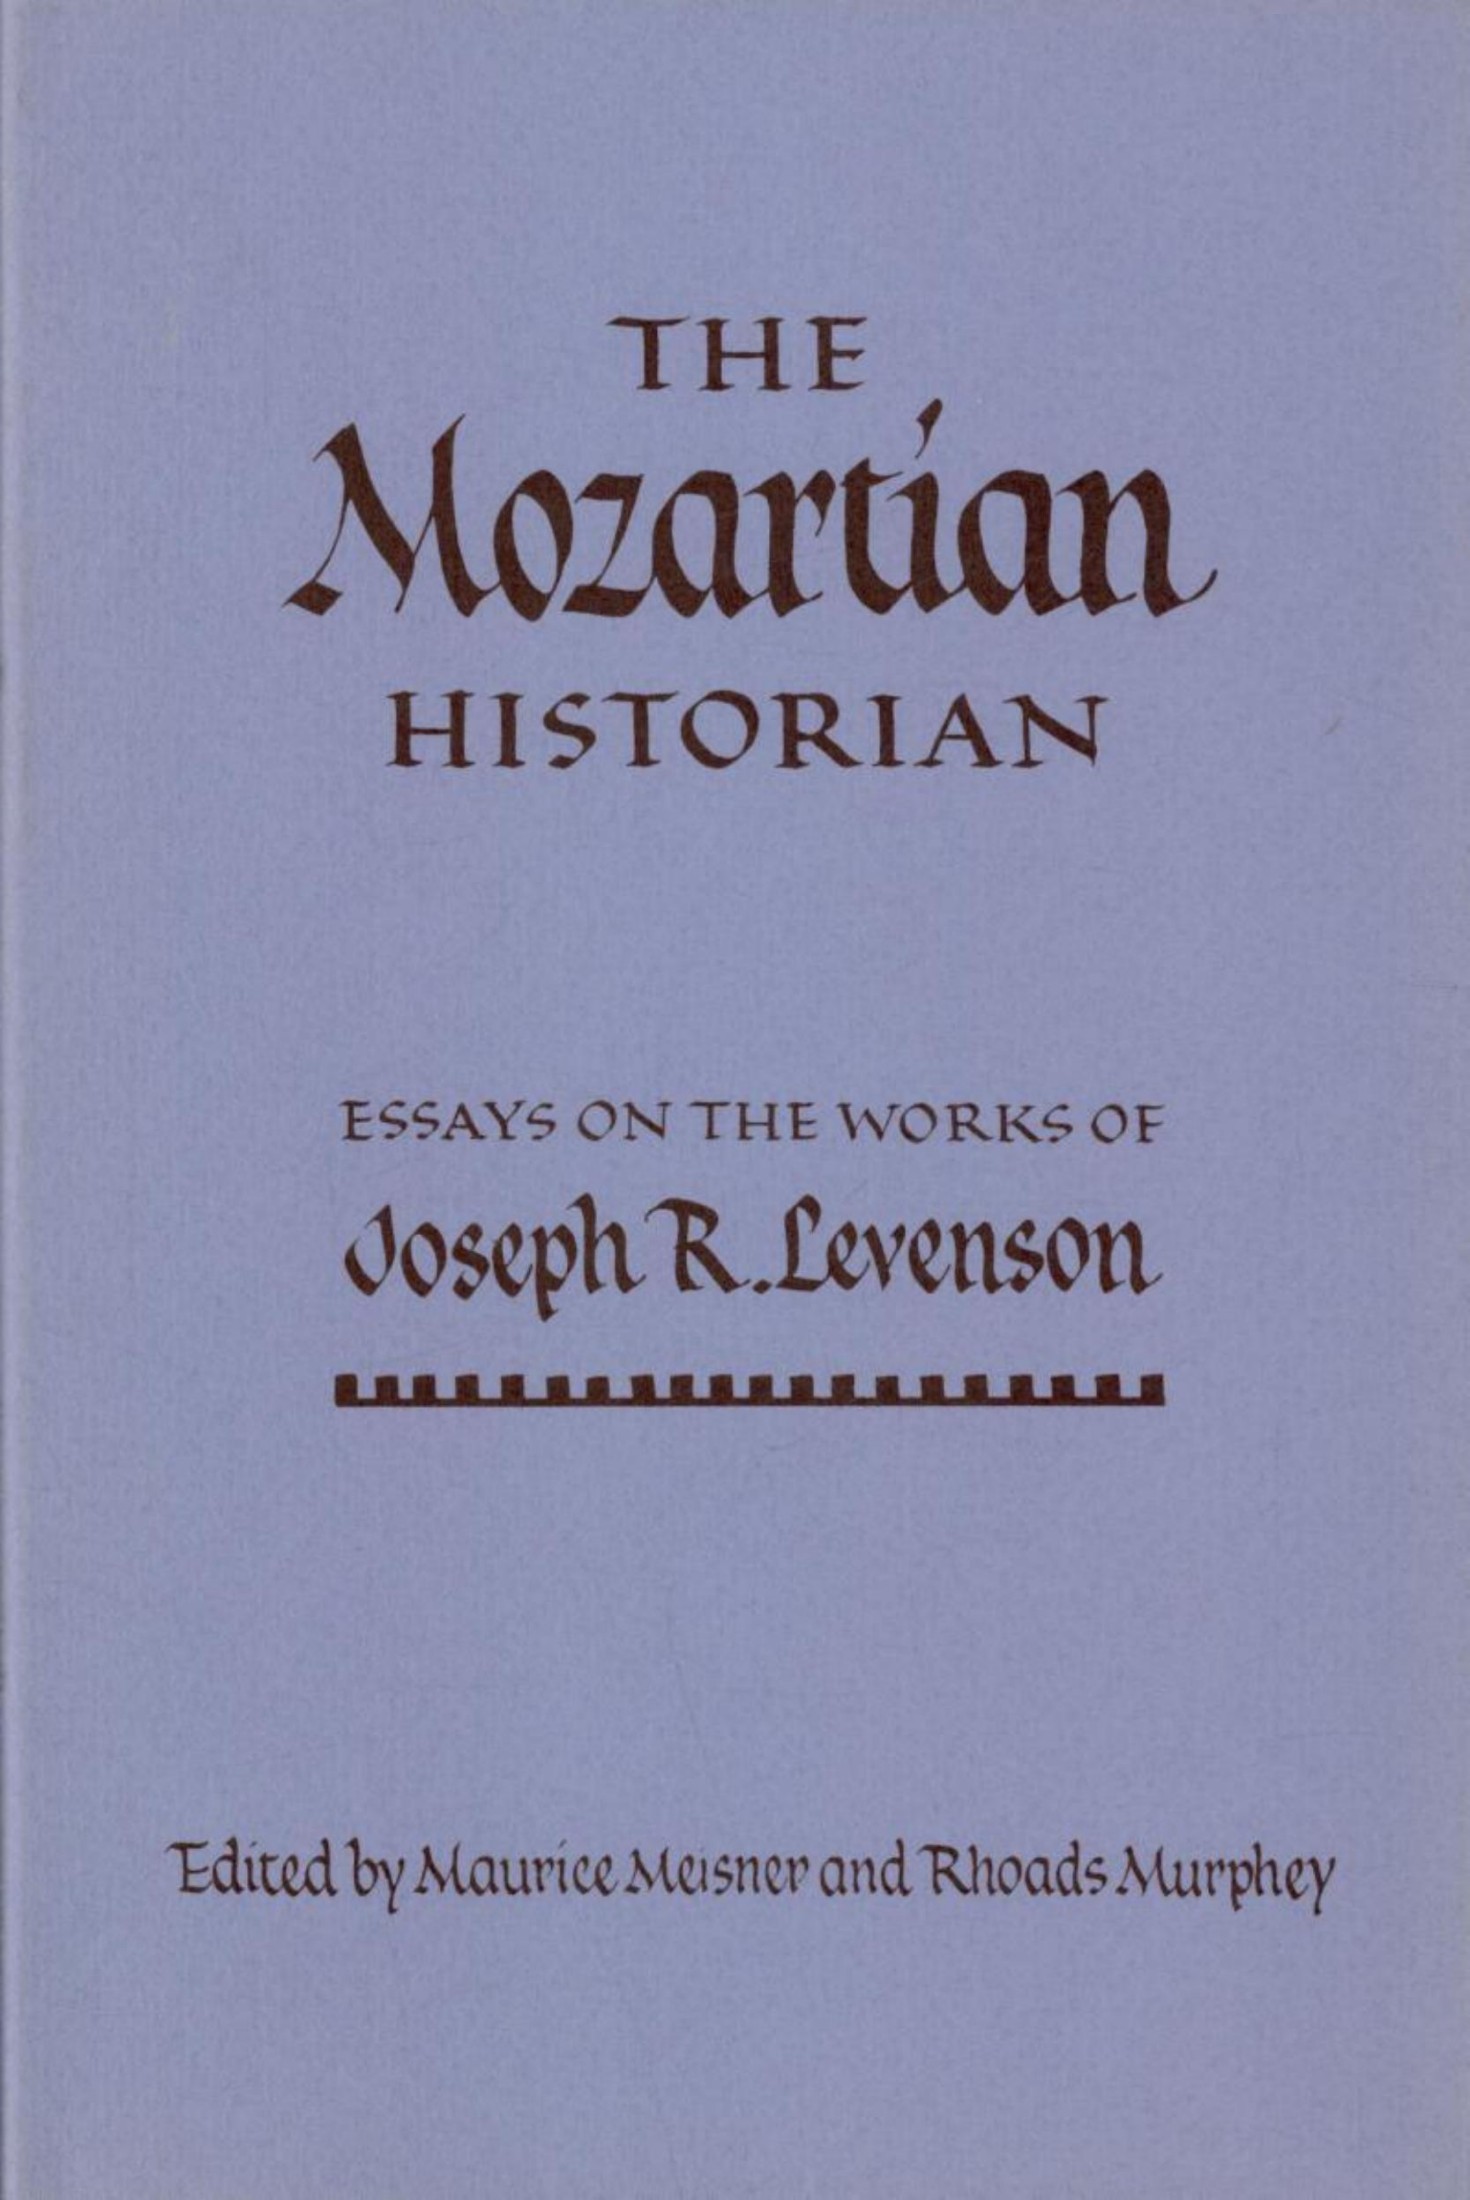 The Mozartian Historian: Essays on the Works of Joseph R. Levenson